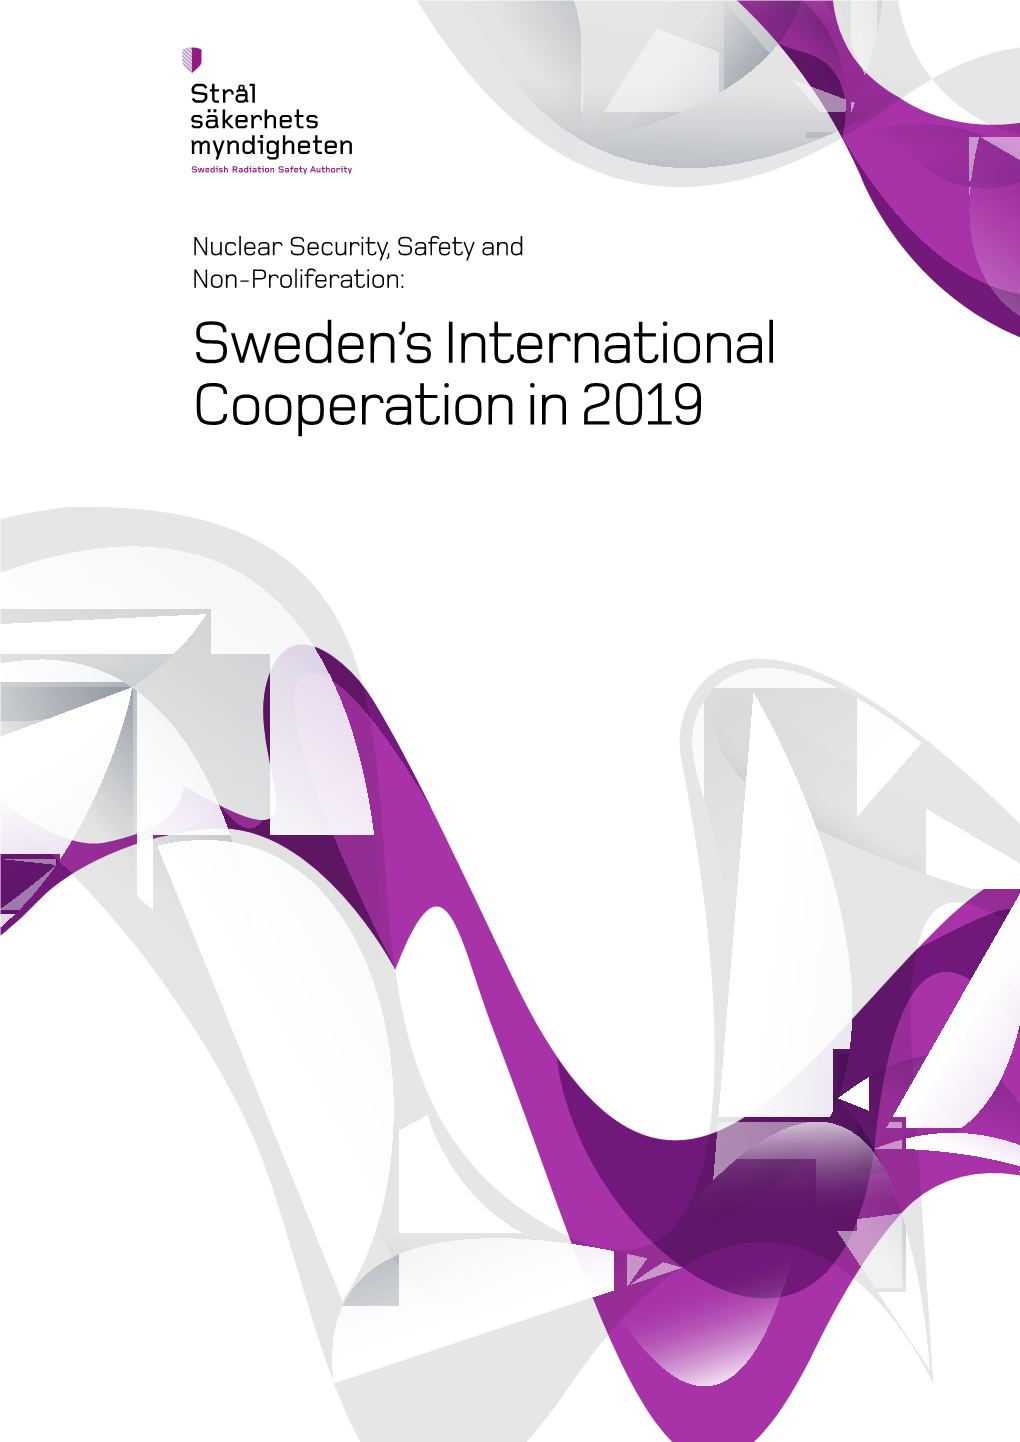 Sweden's International Cooperation in 2019